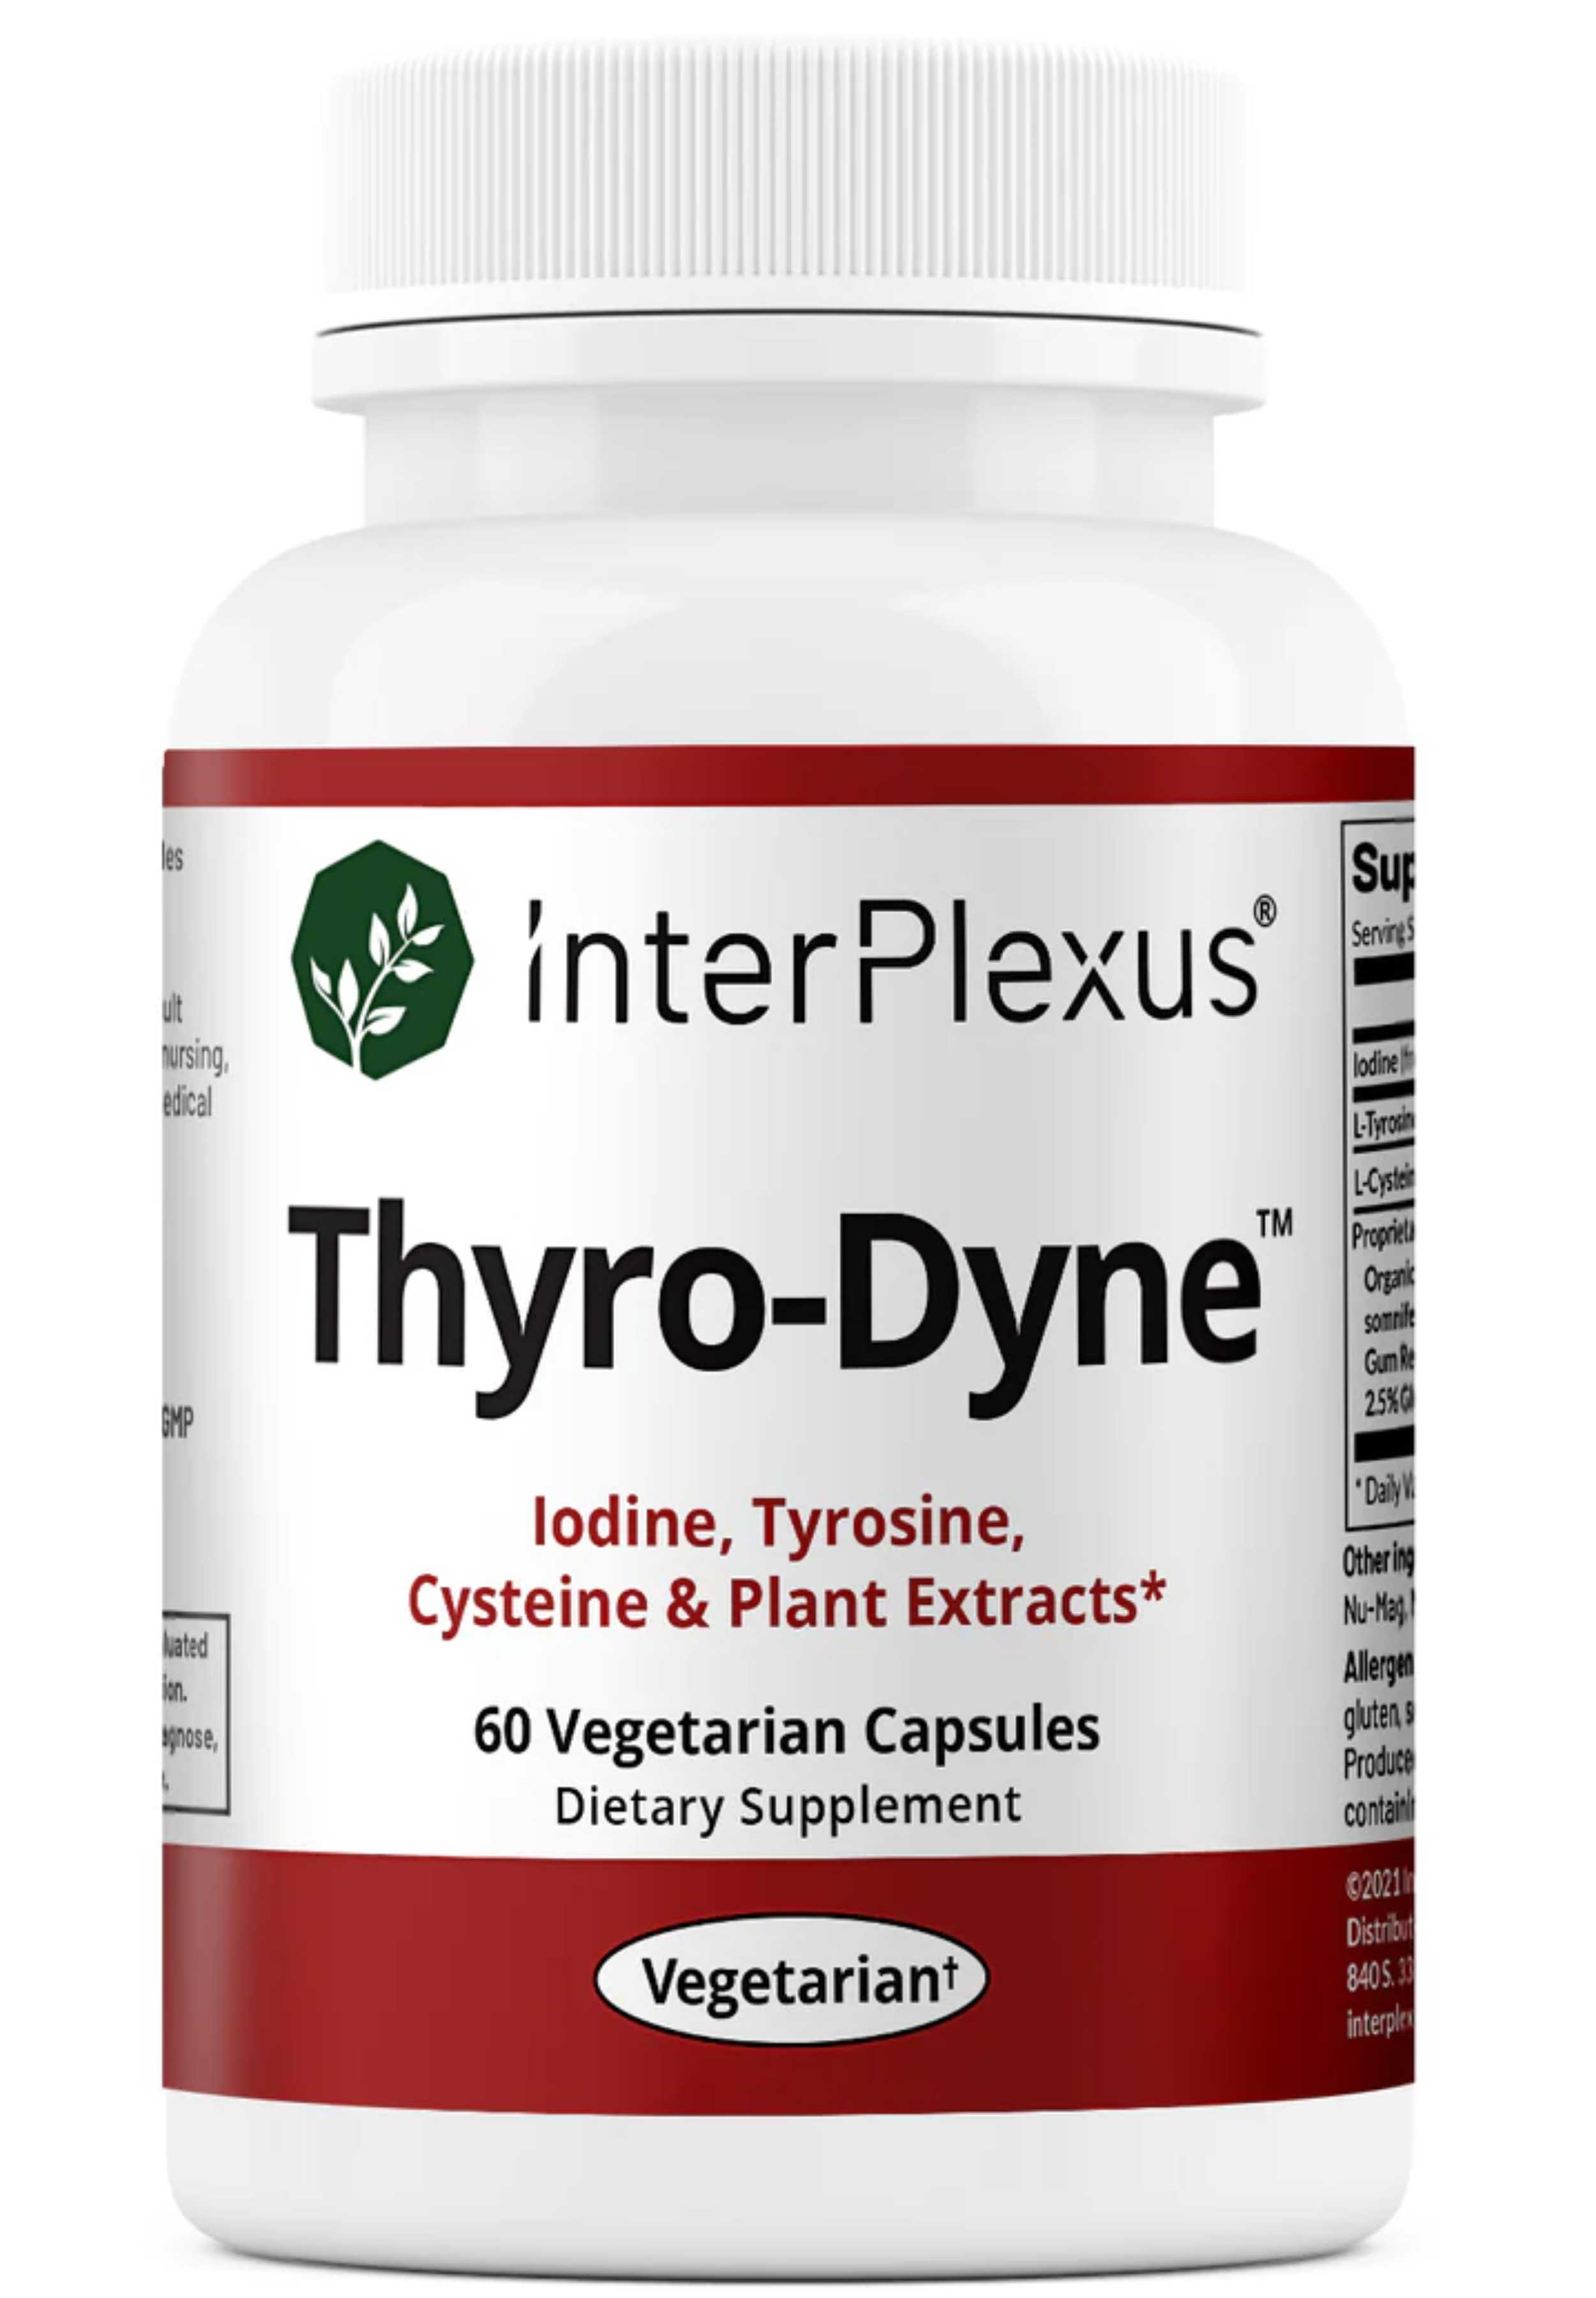 InterPlexus Thyro-Dyne